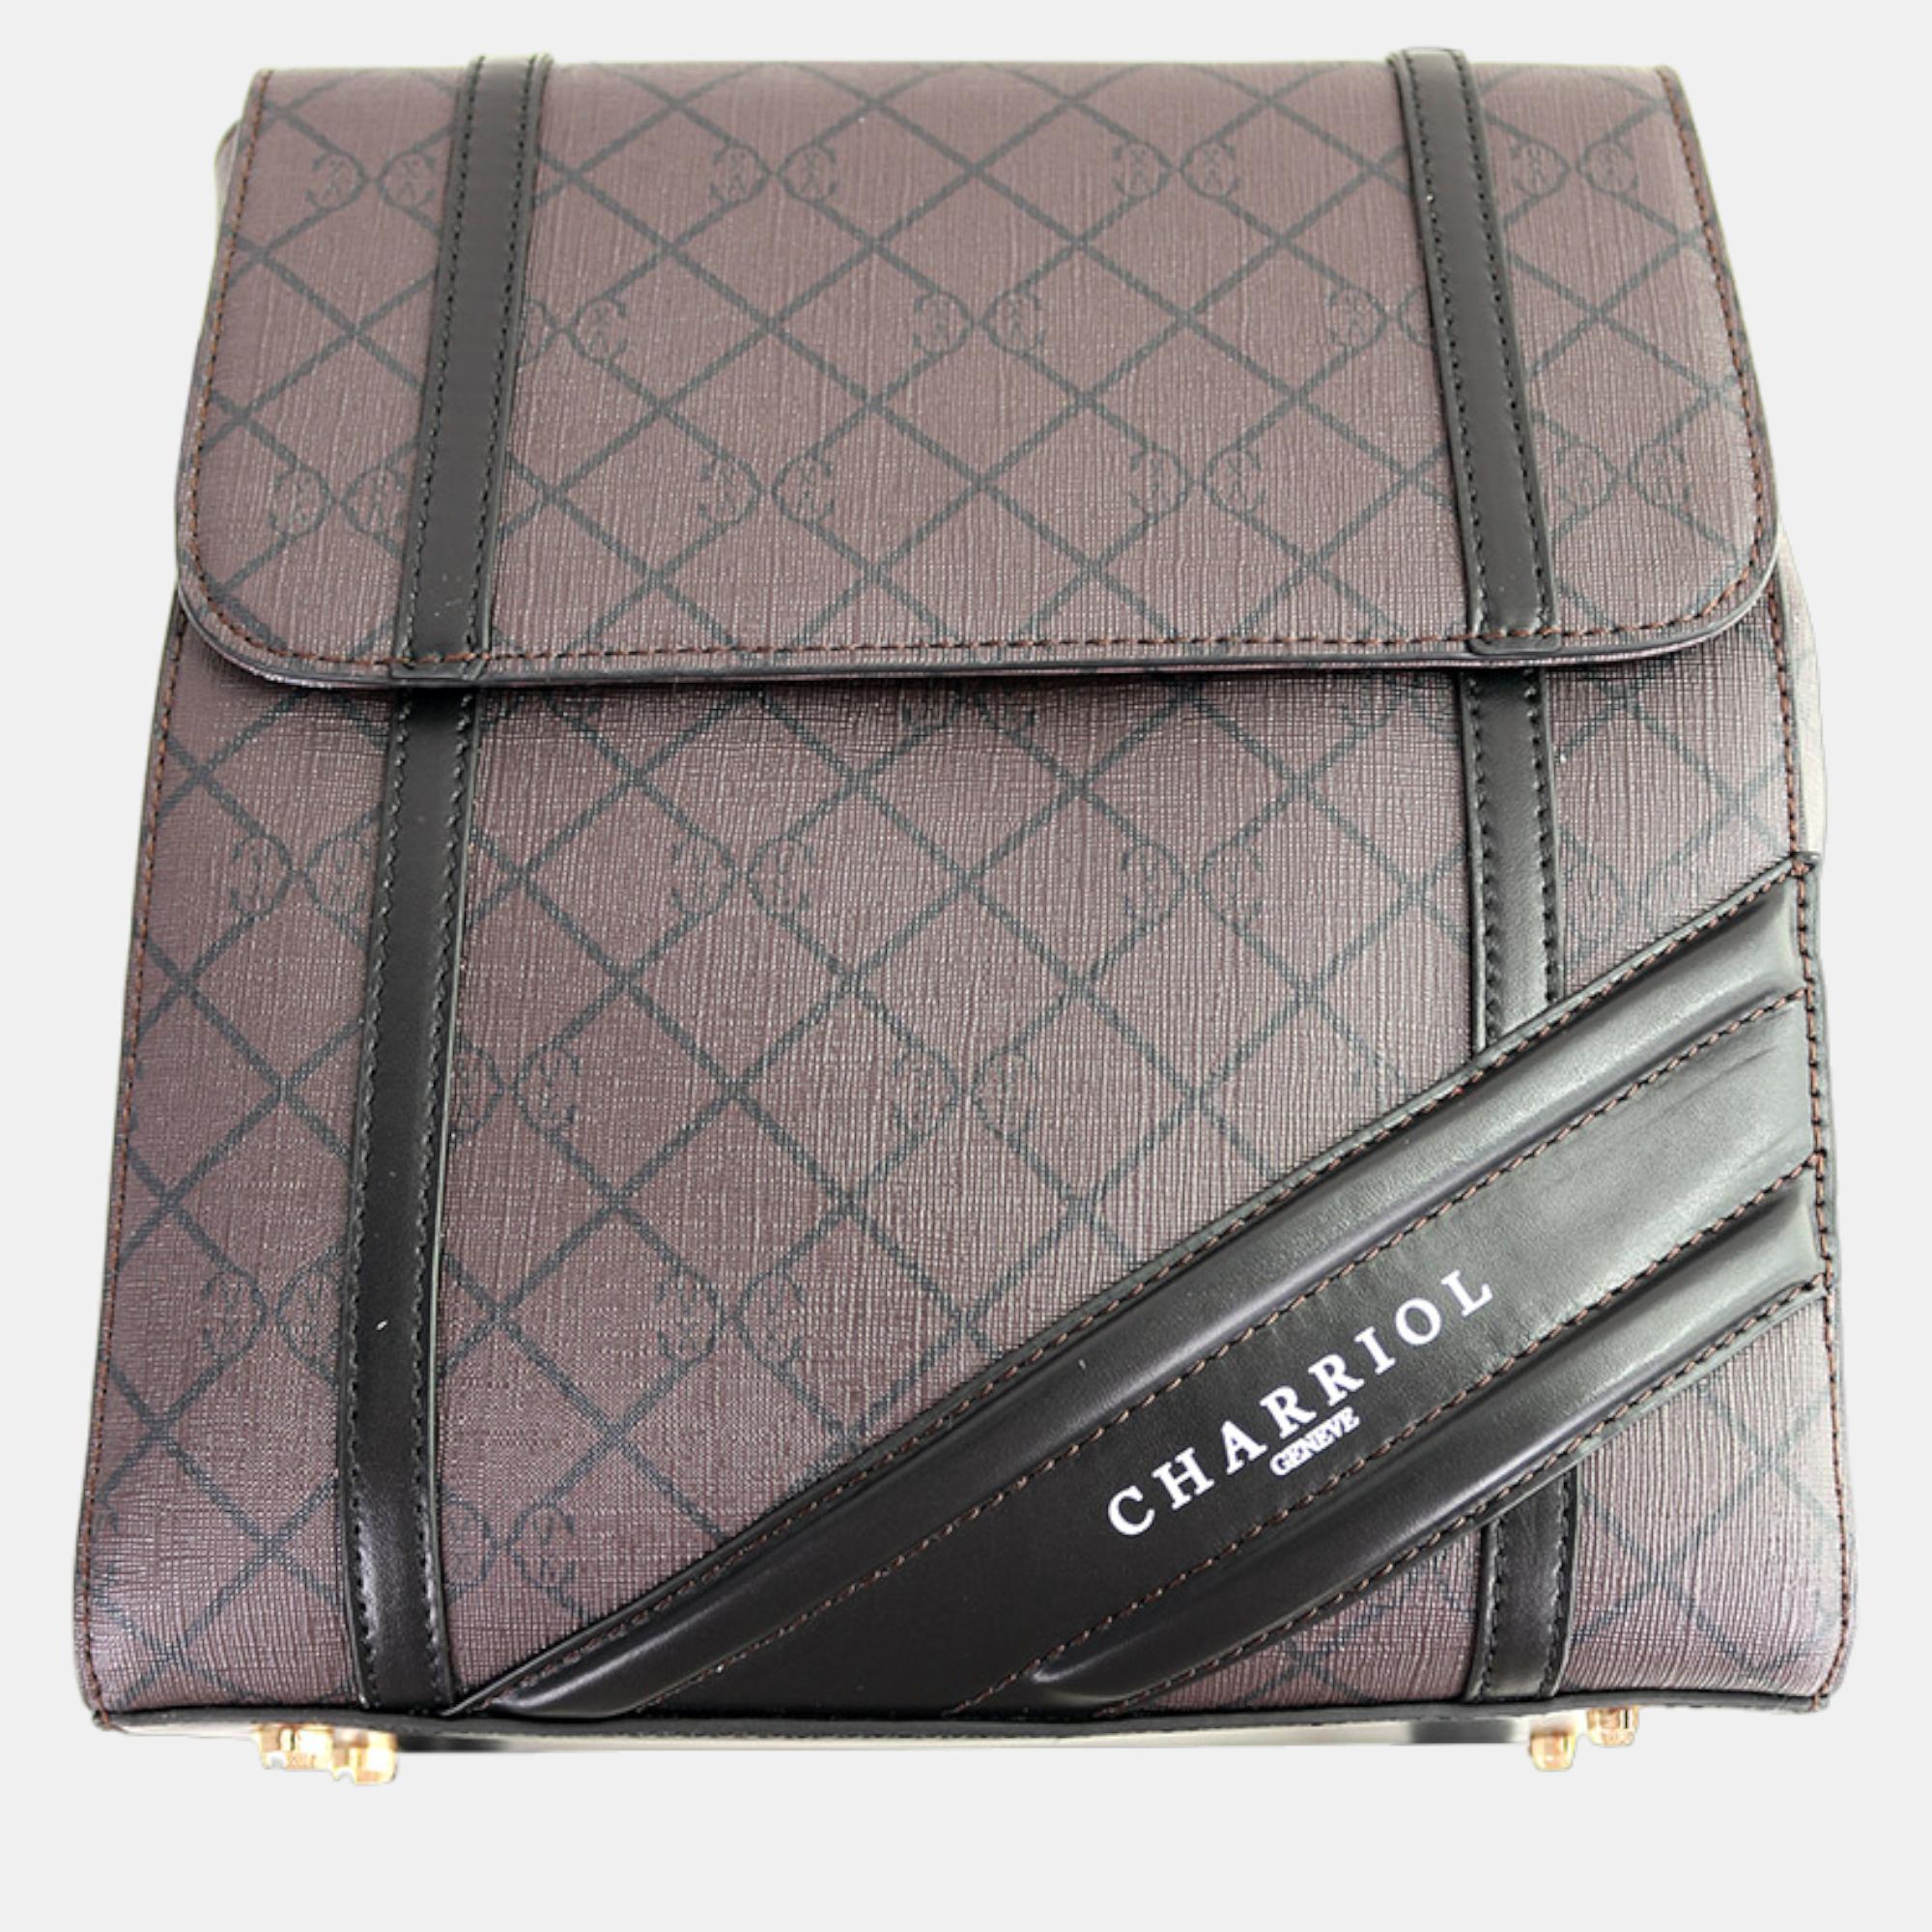 Charriol dark brown leather calypso handbag